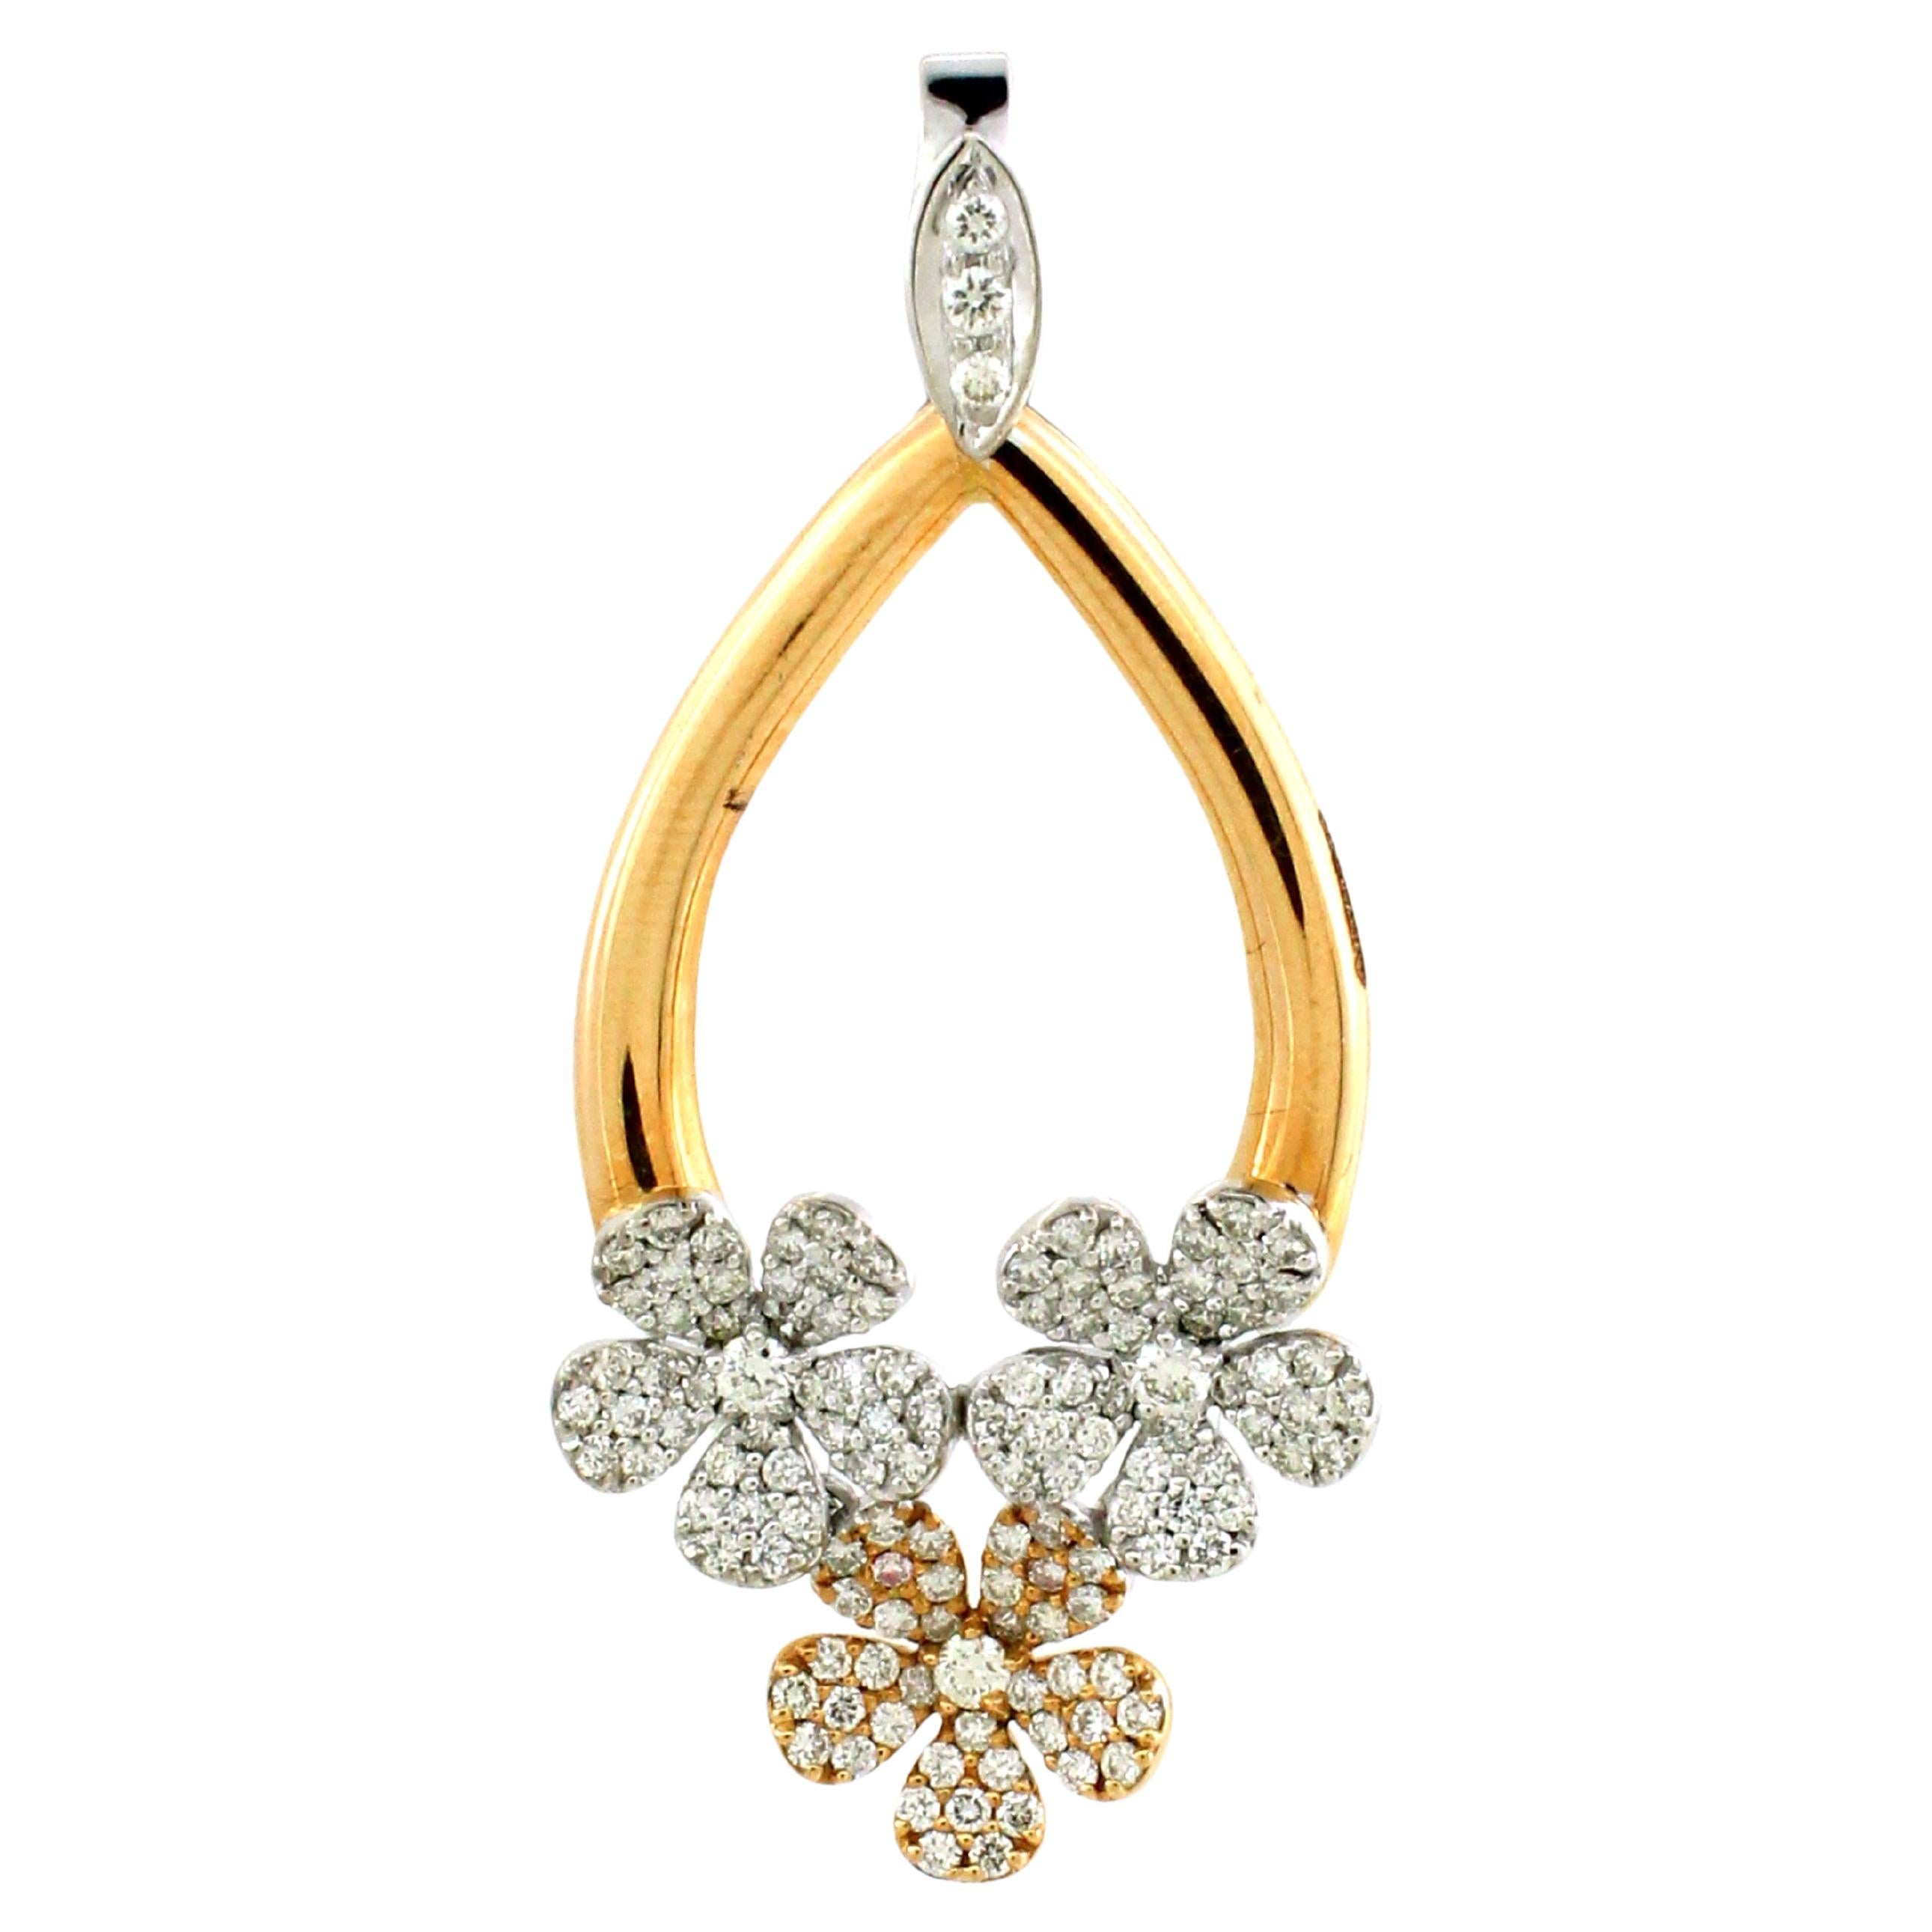 0.74 carats of white diamonds Flower Pendant For Sale